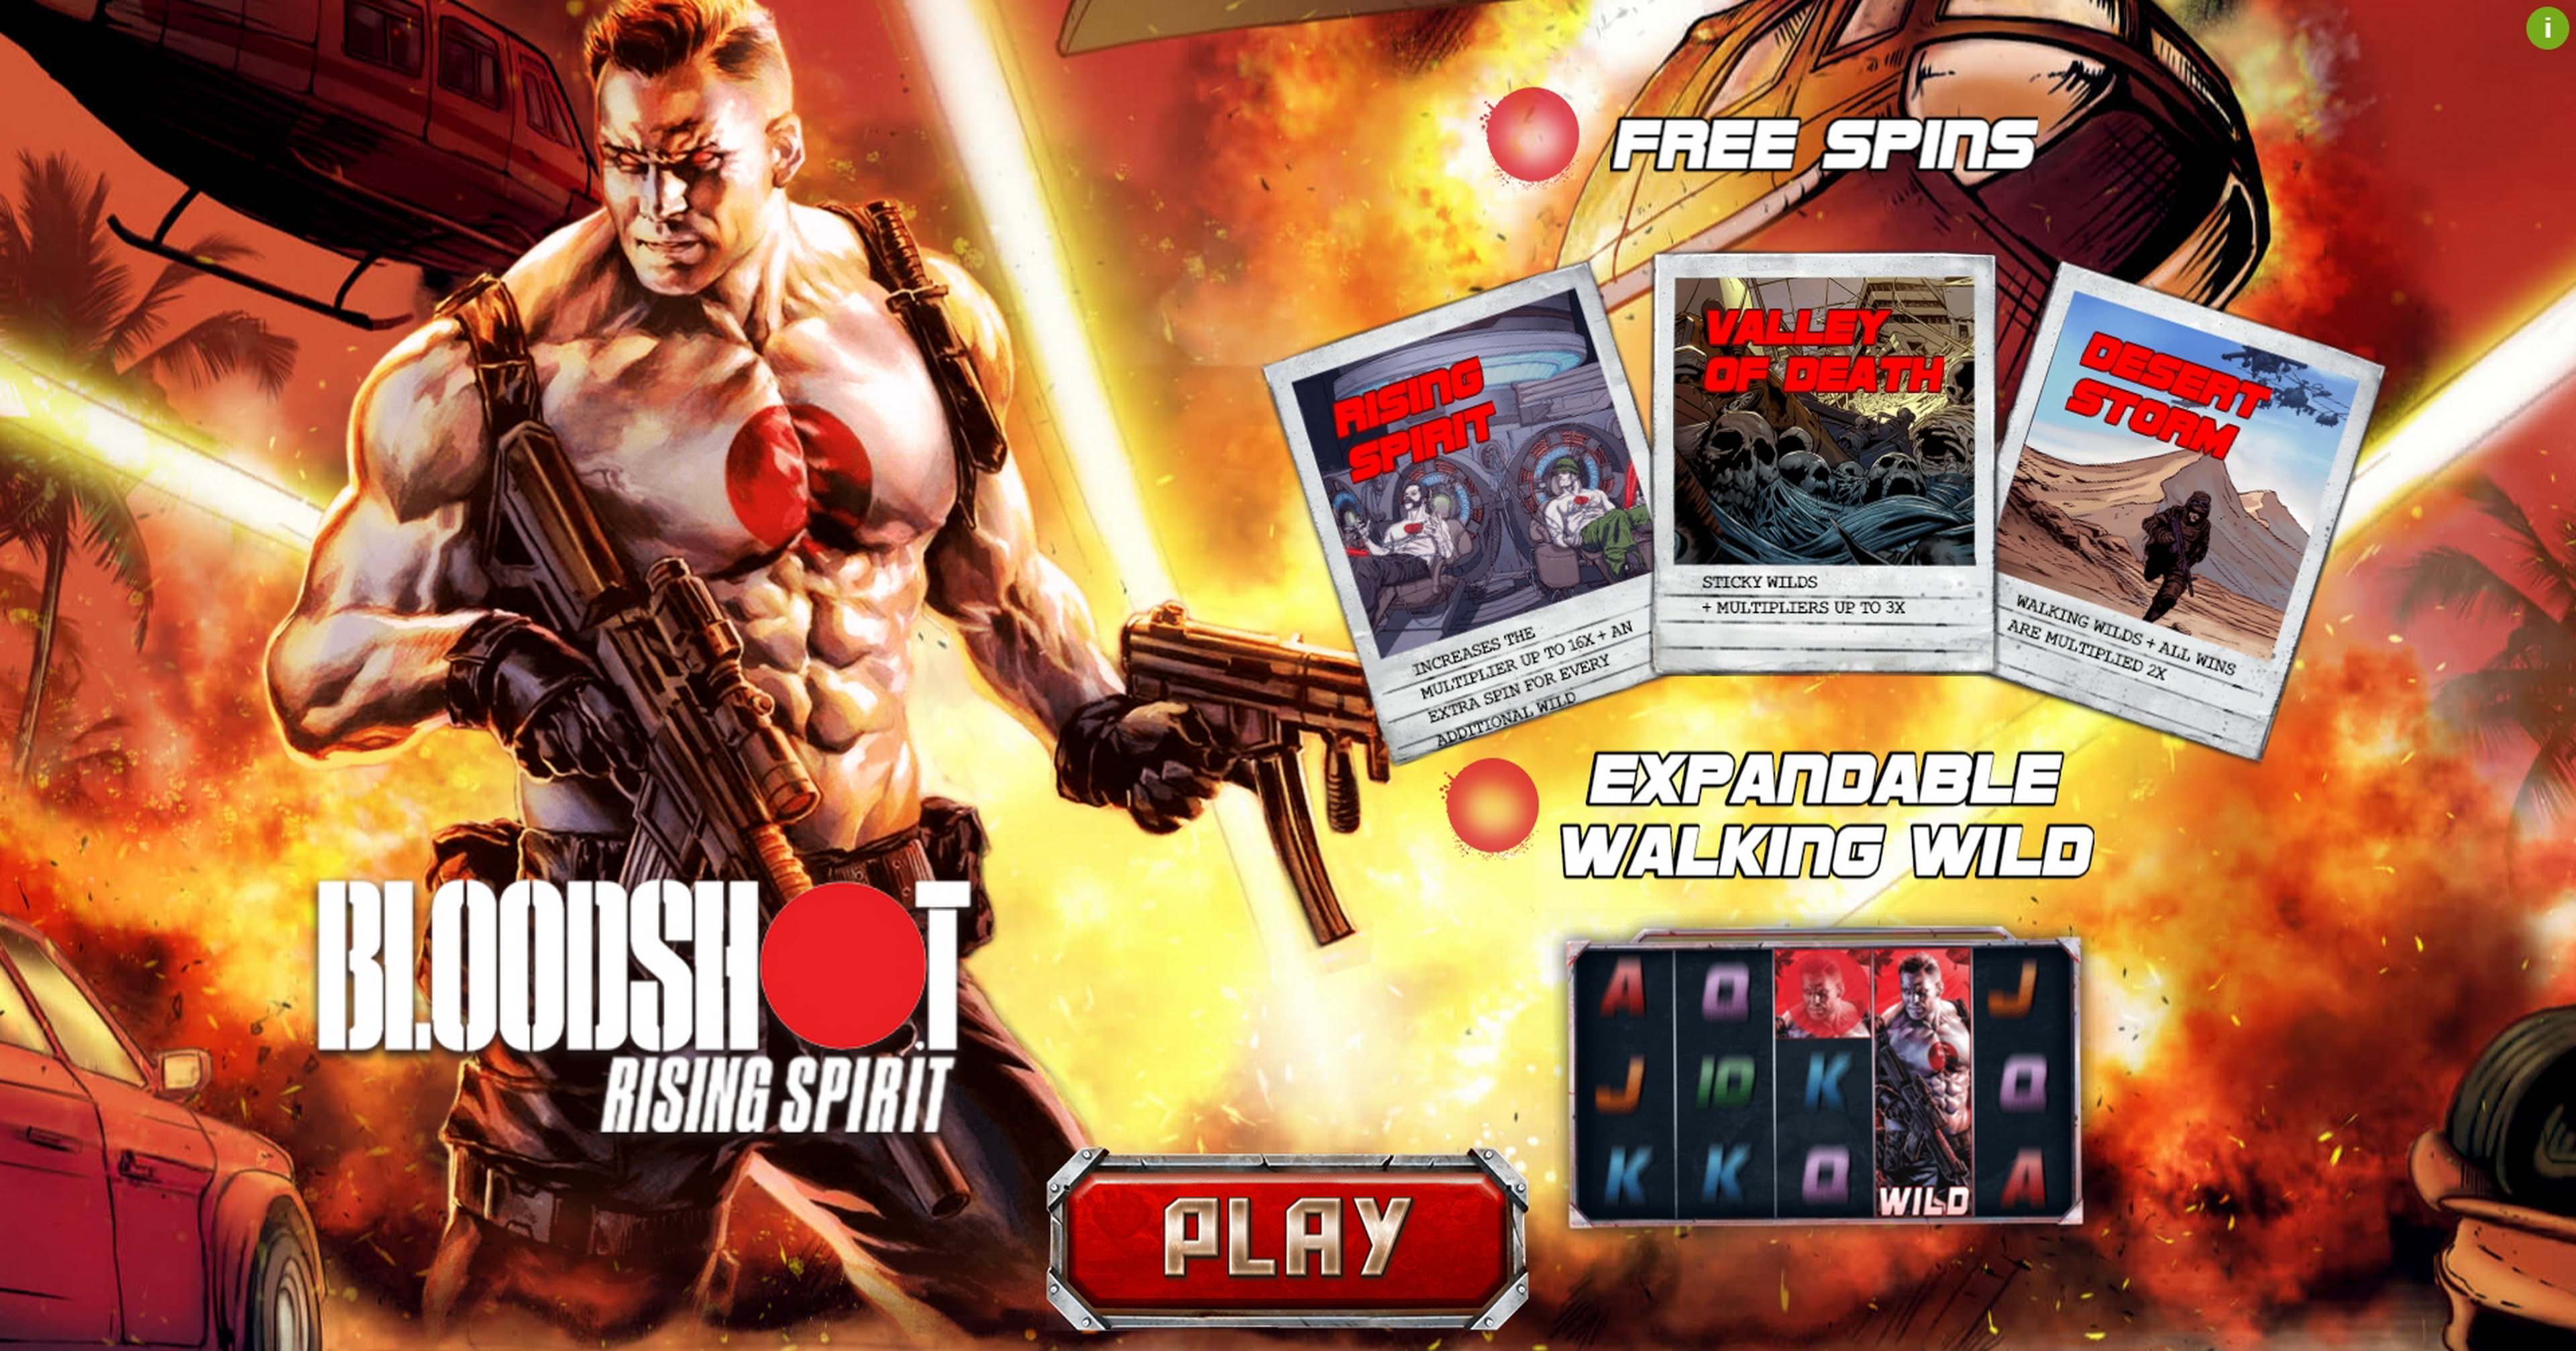 Play Bloodshot Rising Spirit Free Casino Slot Game by PariPlay